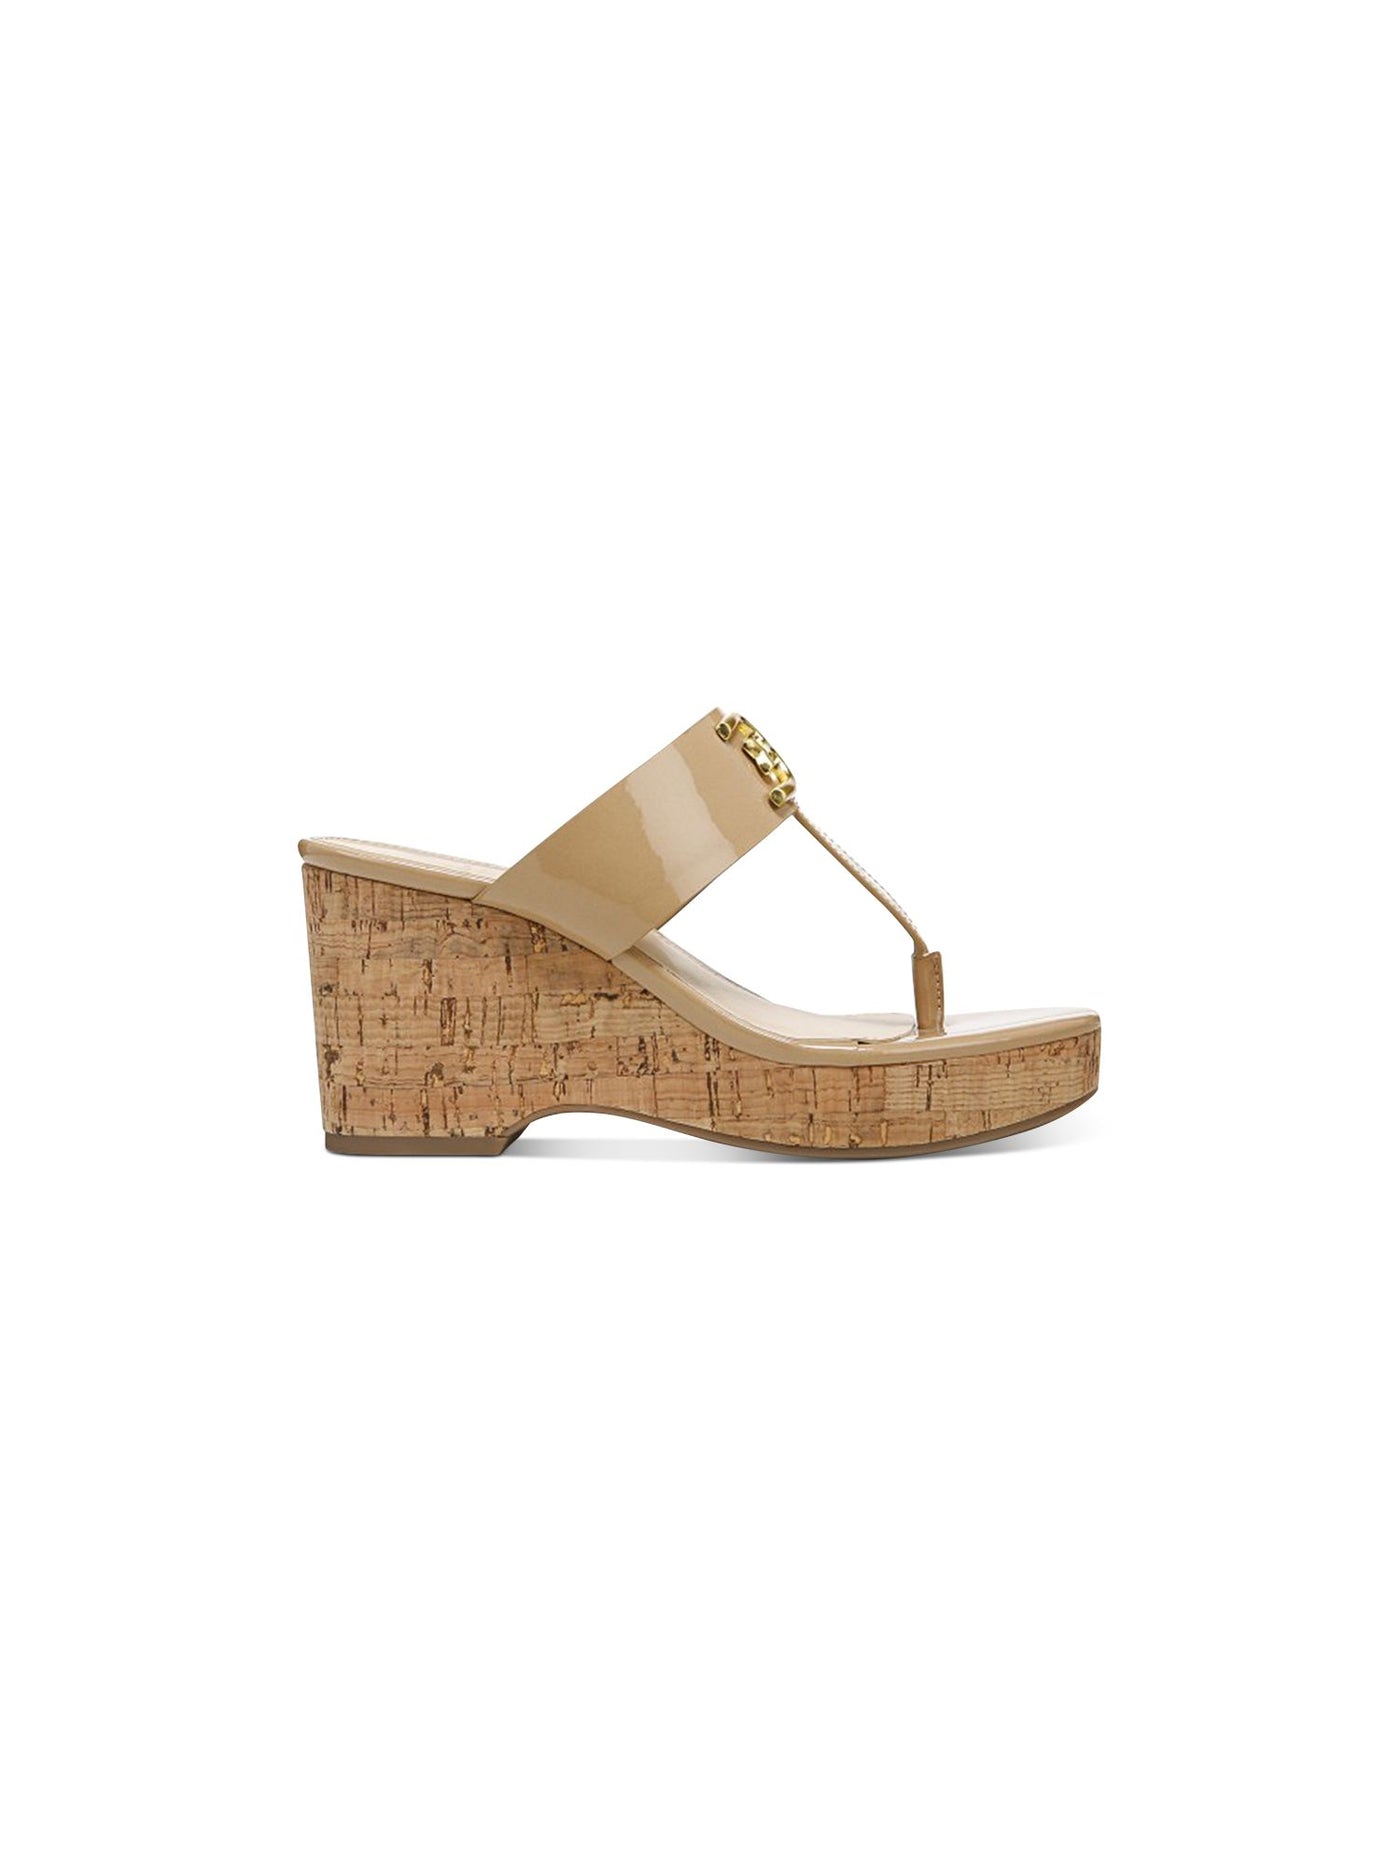 SAM EDELMAN NEW YORK Womens Beige Embellished Yardlie Round Toe Wedge Slip On Sandals Shoes 10 M